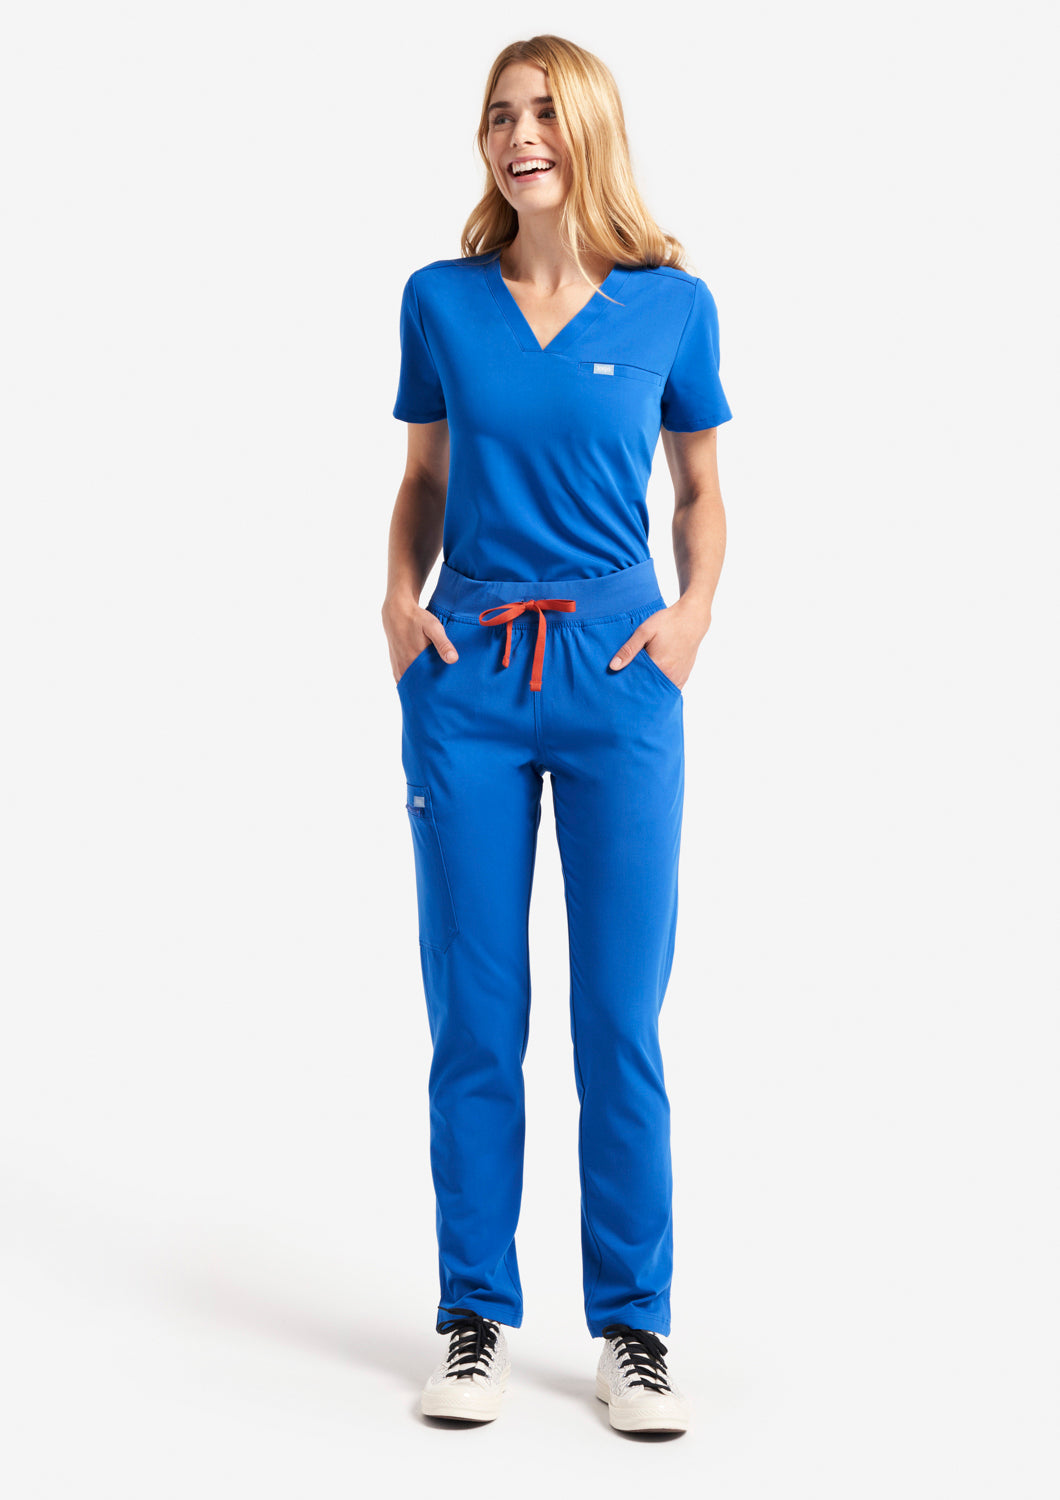 LAGO Scrubs - Women's Royal Blue Trillium - 3-Pocket Scrub Pants